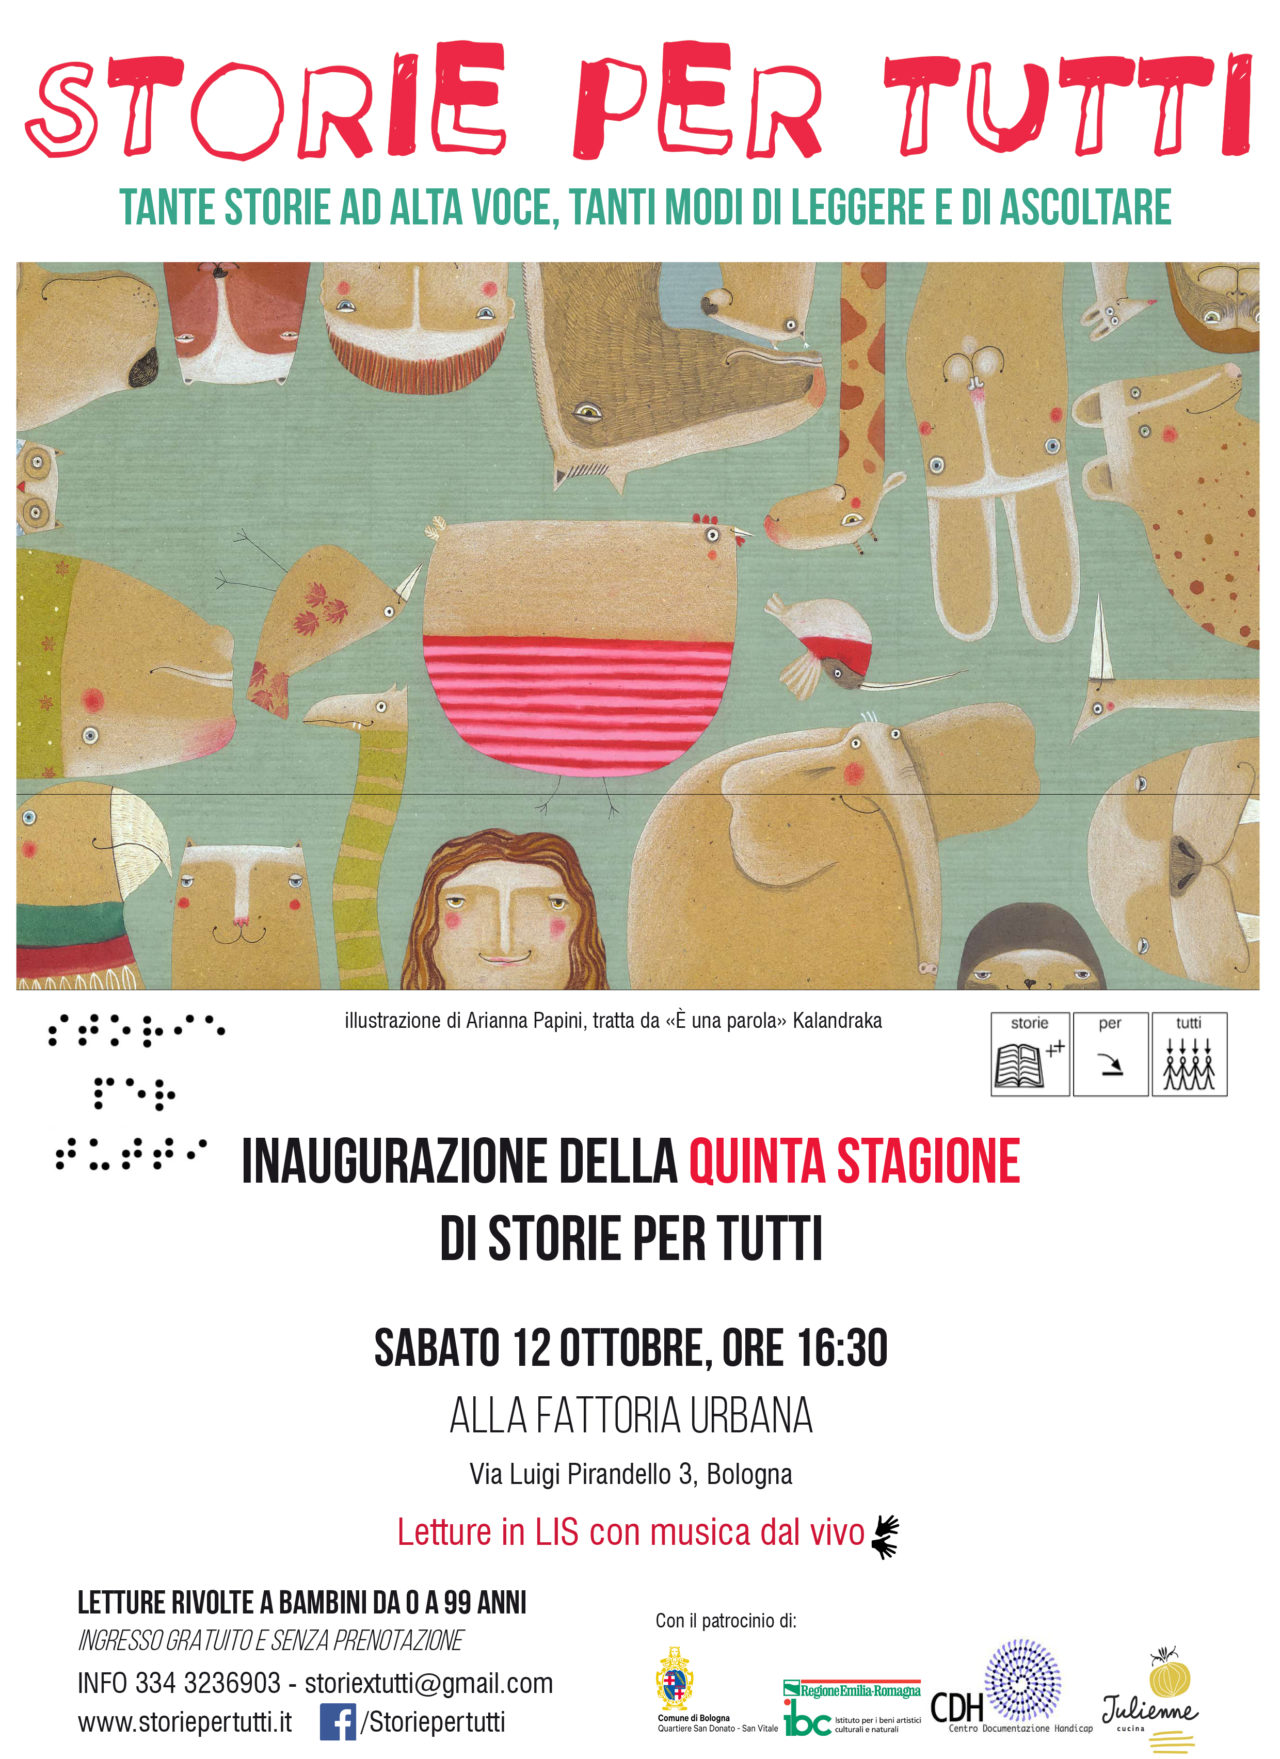 http://www.storiepertutti.it/wp-content/uploads/2019/10/STORIE-PER-TUTTI-inaugurazione-5-stagione-a-colore-1280x1759.jpg